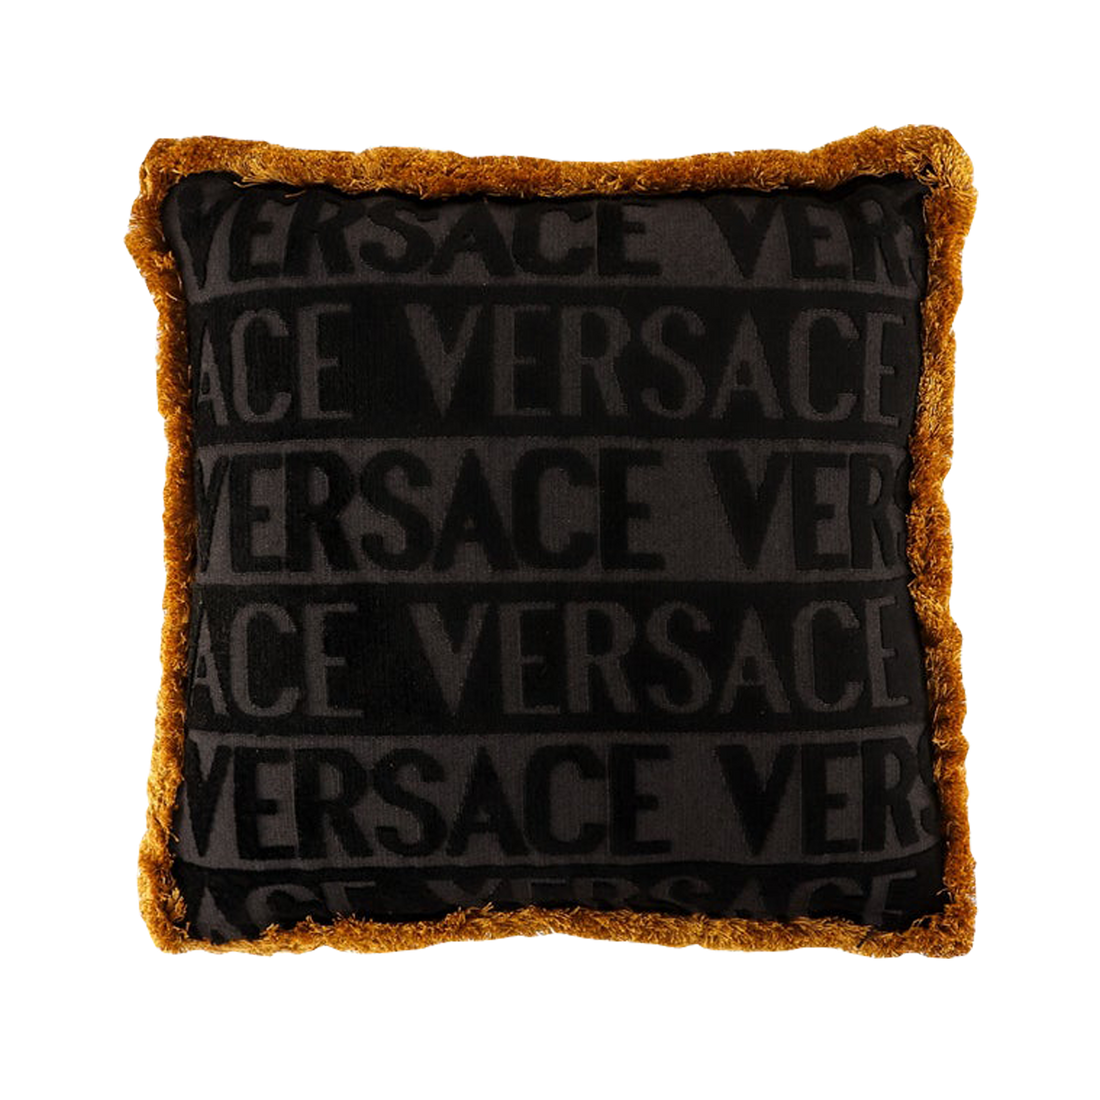 Versace Logomania Cushion- Black